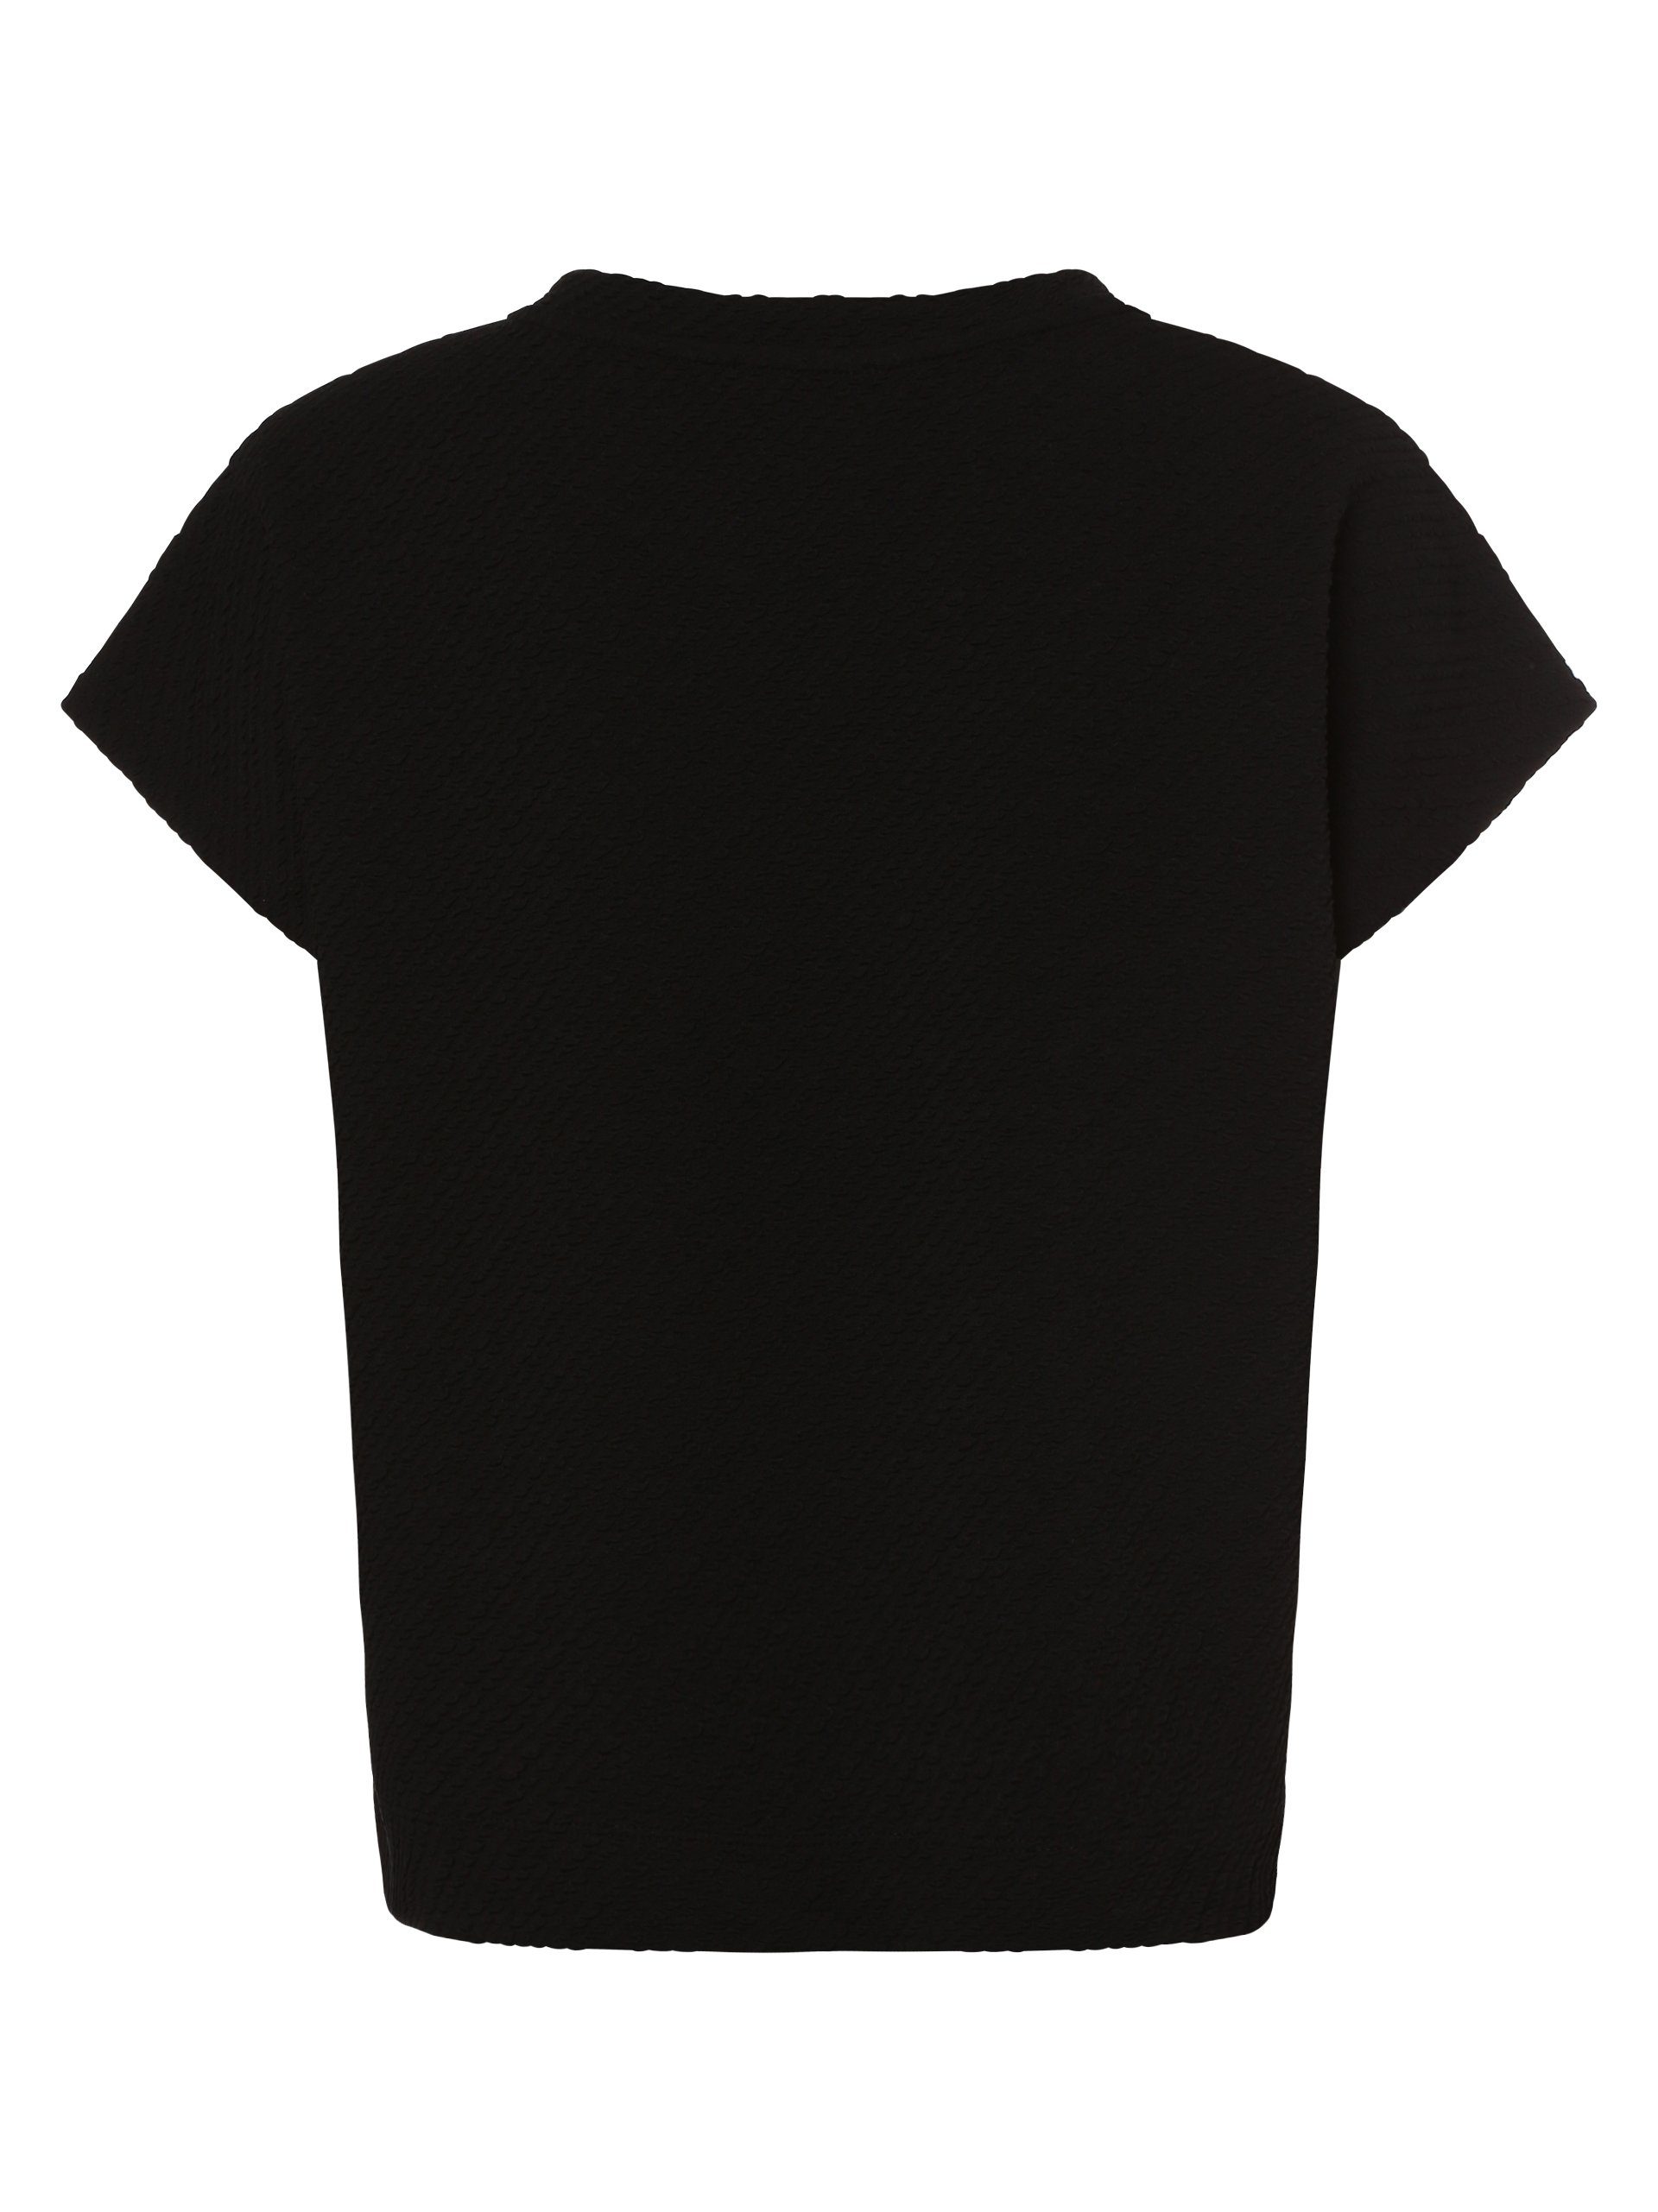 OPUS 900 Sweatshirt black Gularu